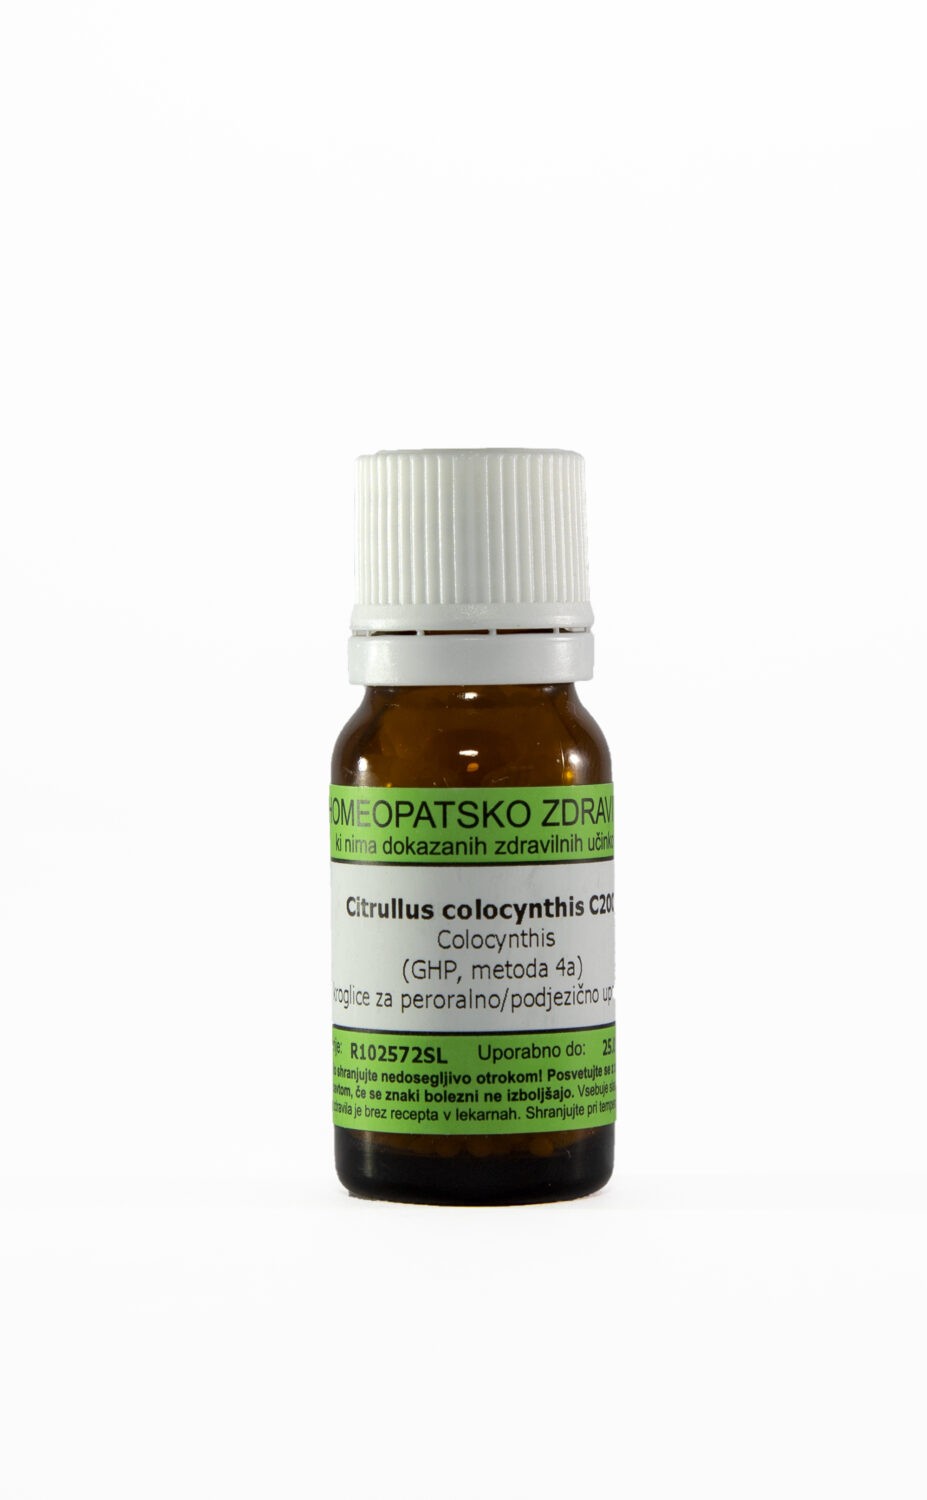 Citrullus colocynthis C200 homeopatske kroglice, 1 g